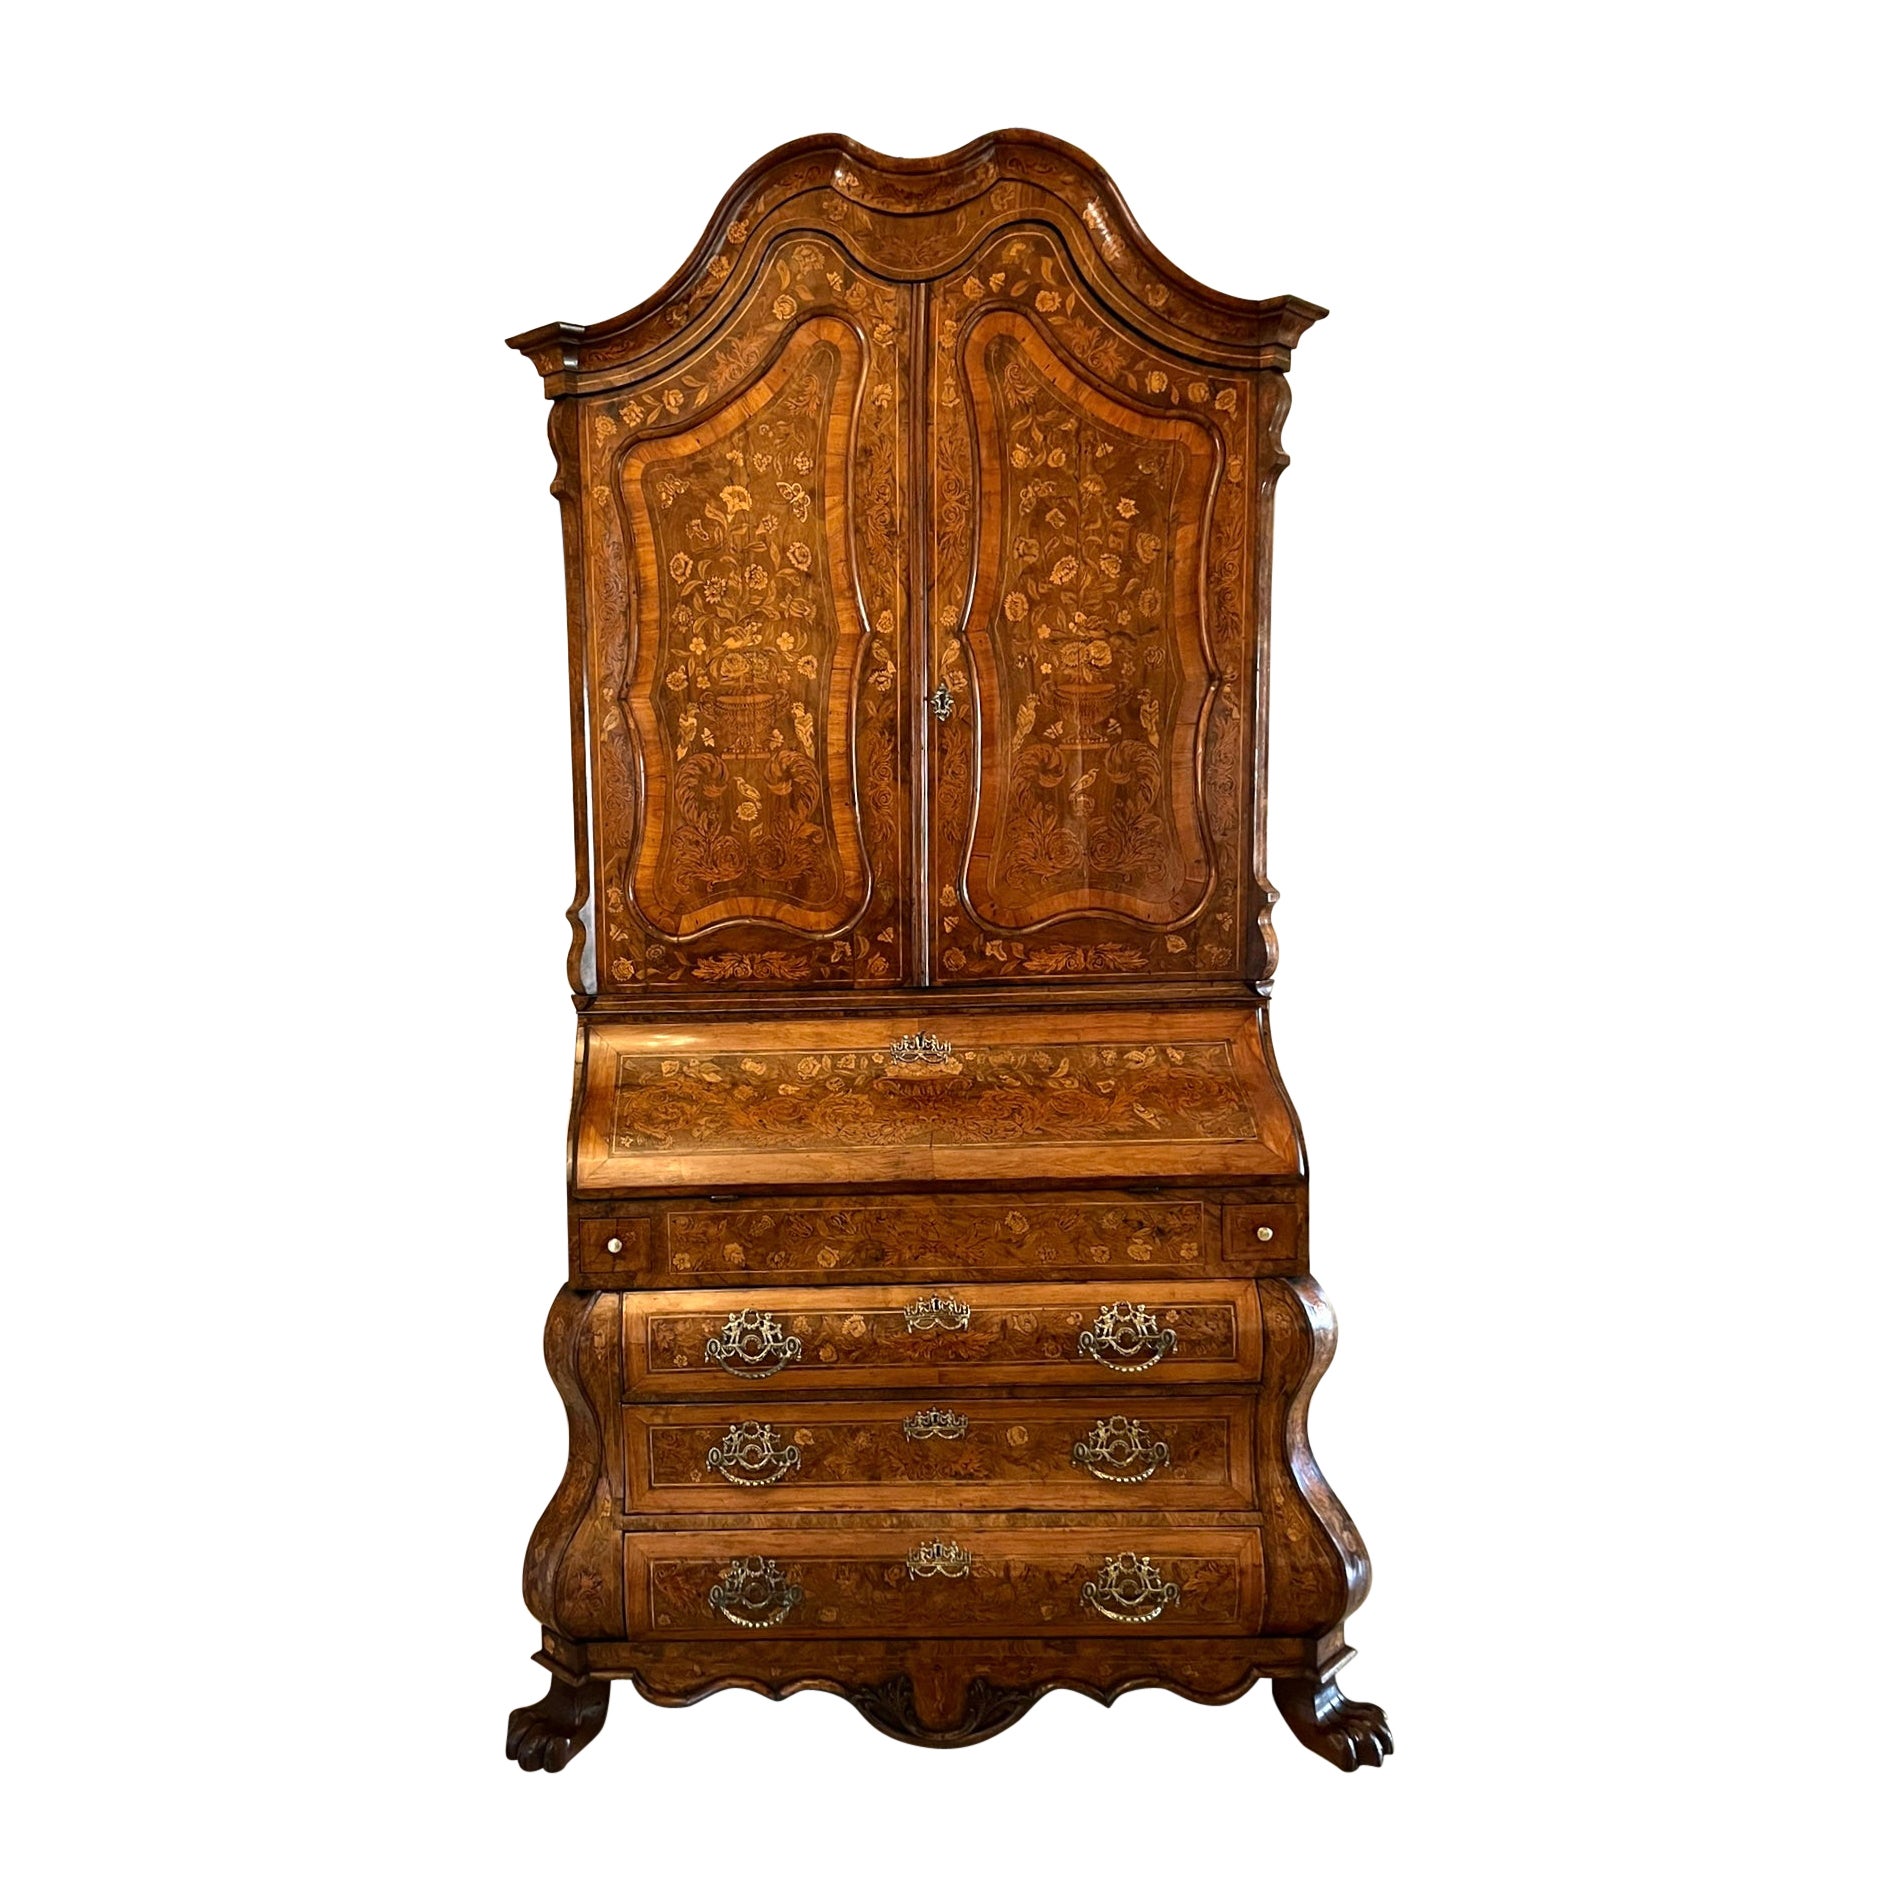 Outstanding Quality Antique Dutch Marquetry Inlaid Burr Walnut Bureau Bookcase For Sale